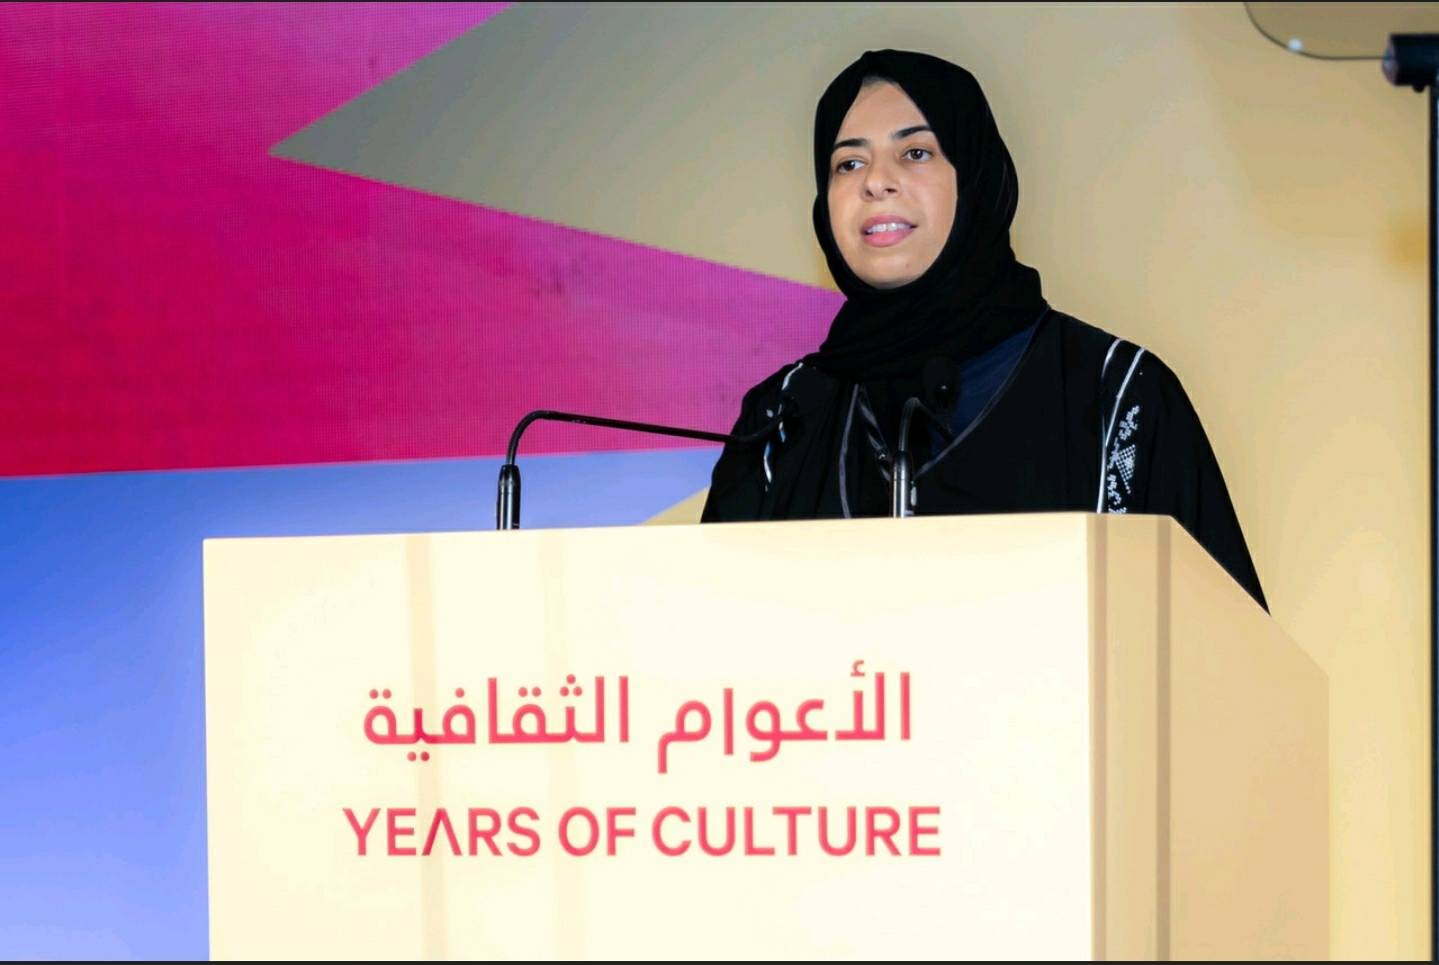 Qatar-MENASA 2022 Year of Culture begins